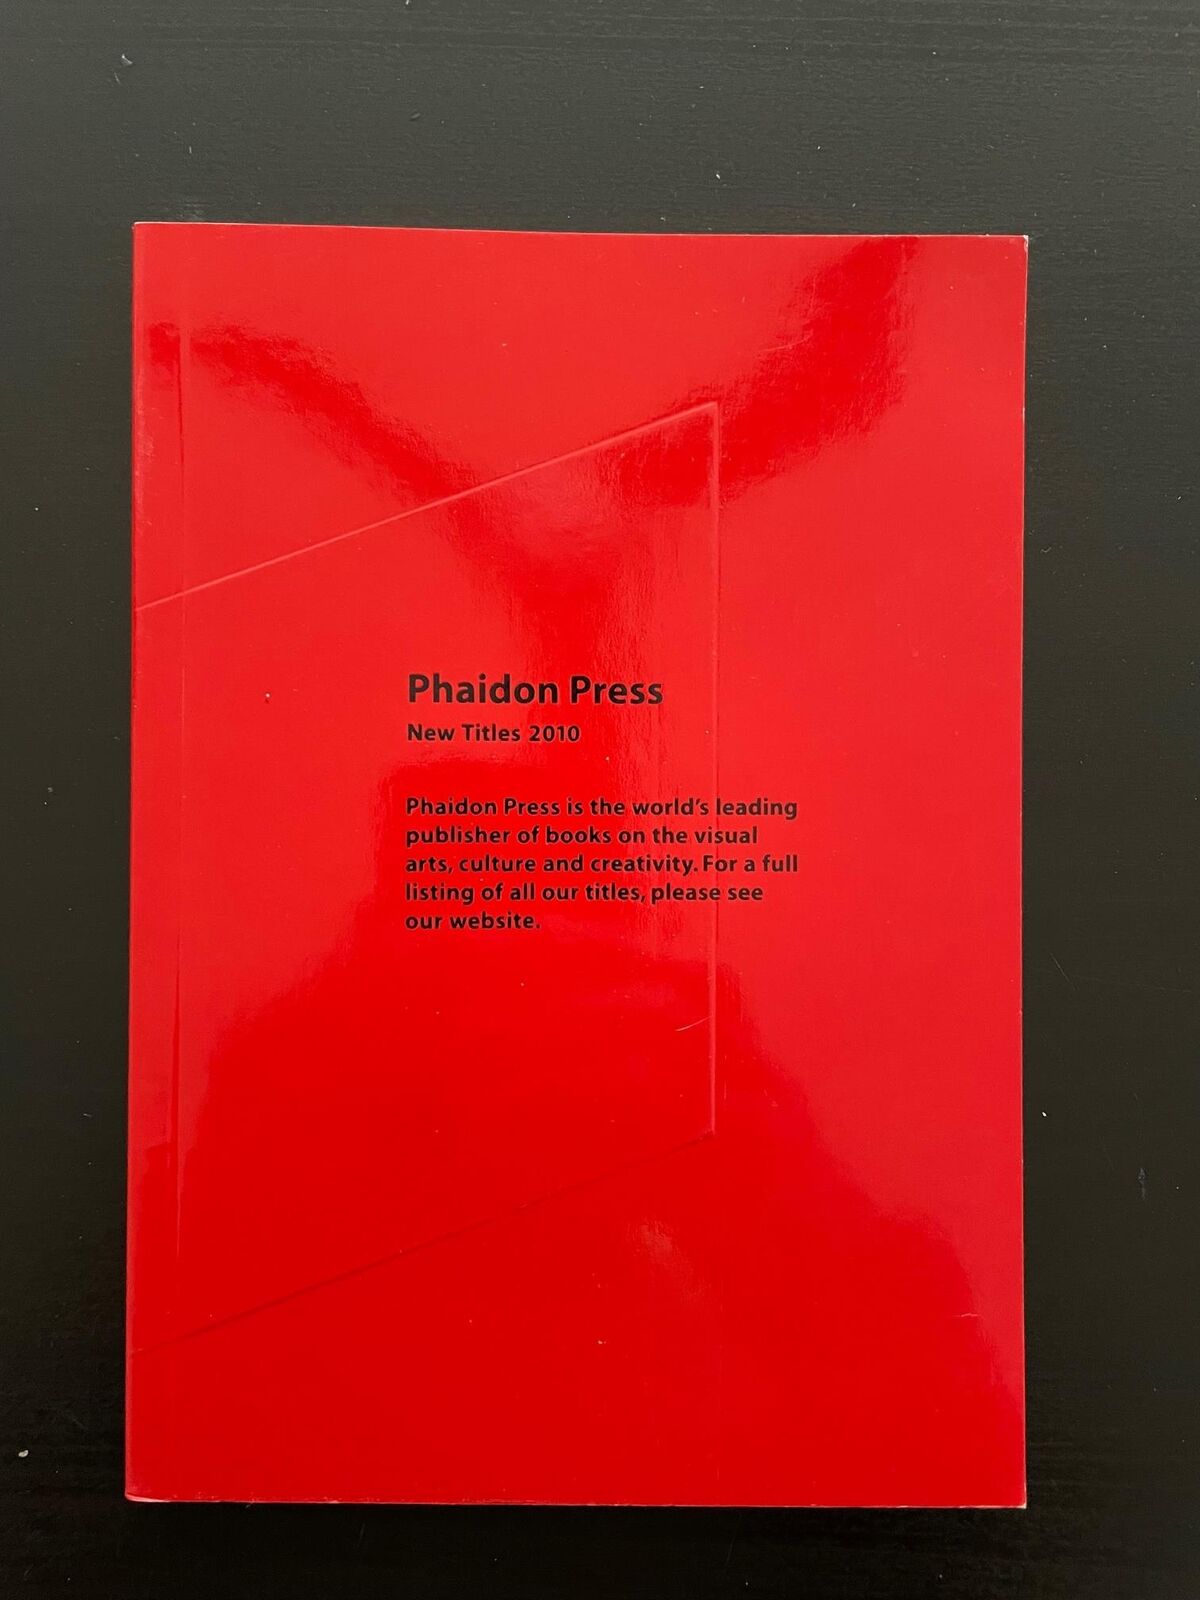 Phaidon Press New Titles 2010 